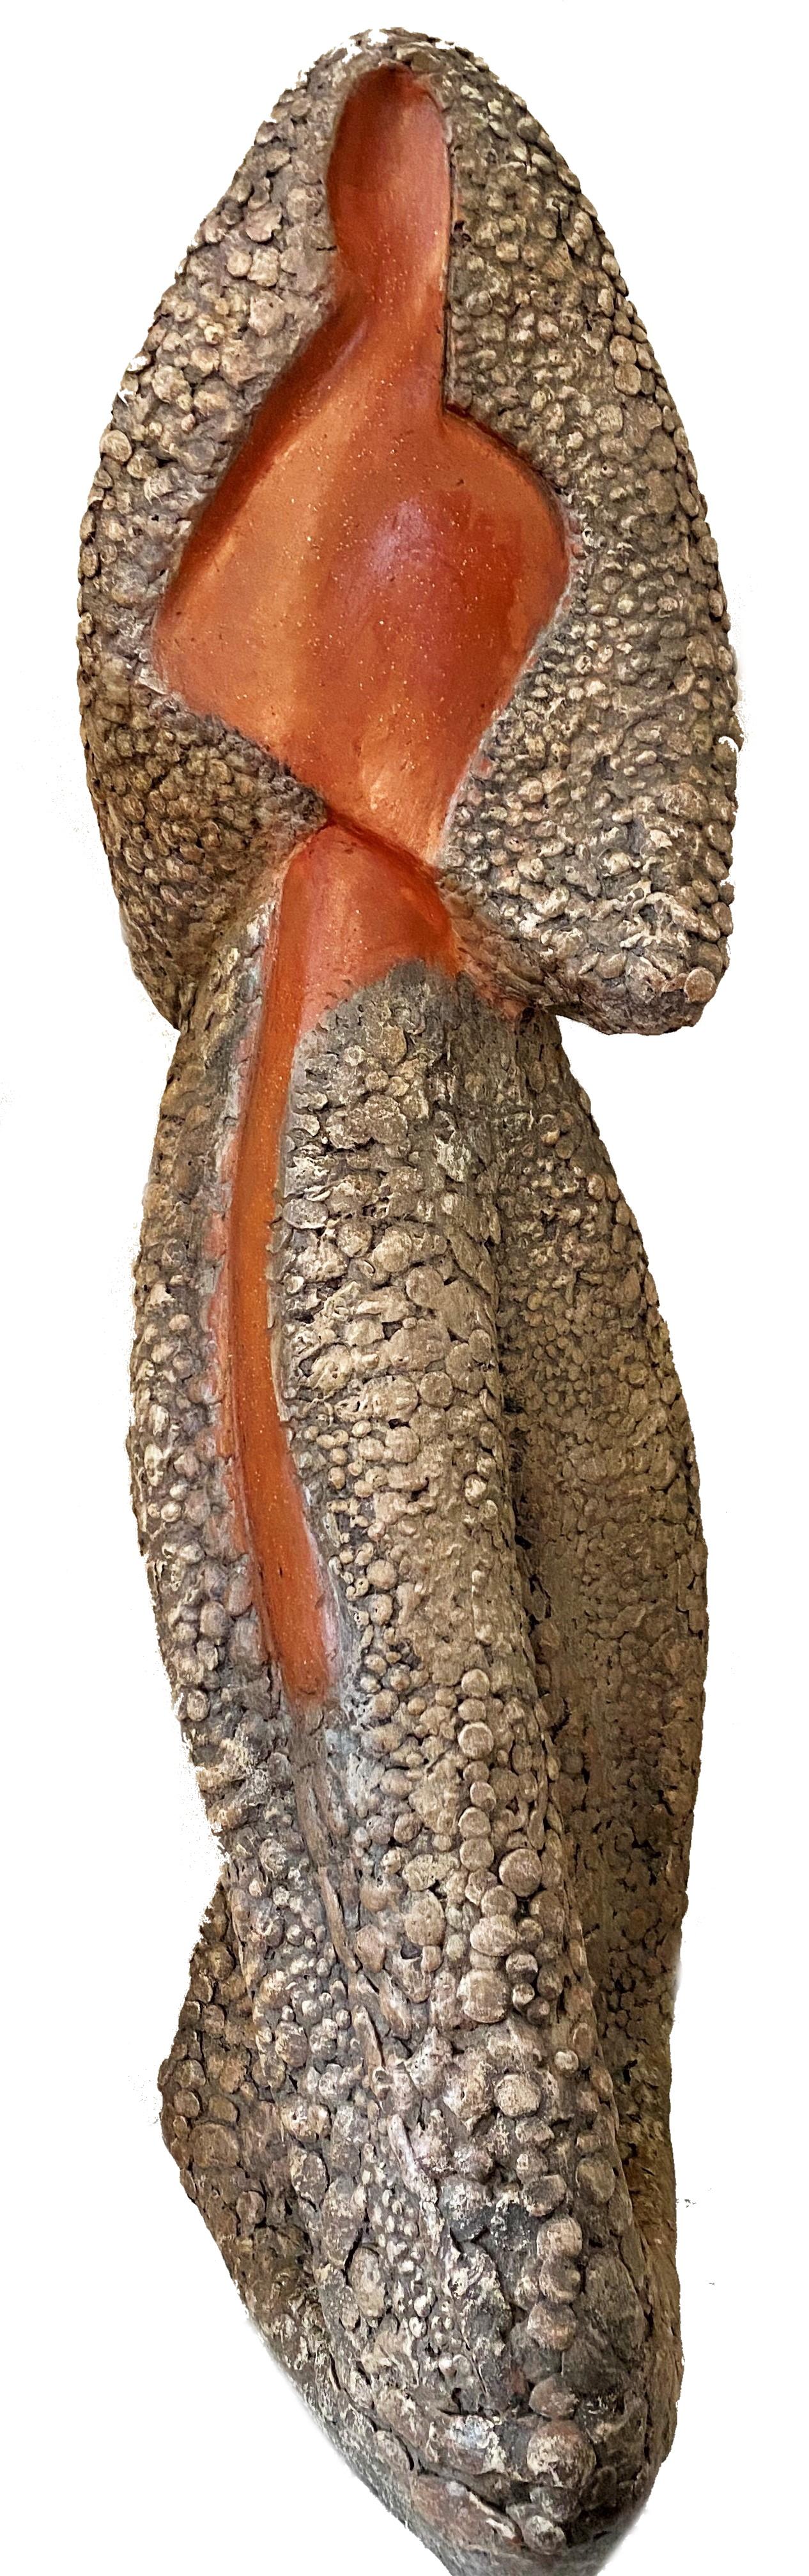 archipenko sculpture